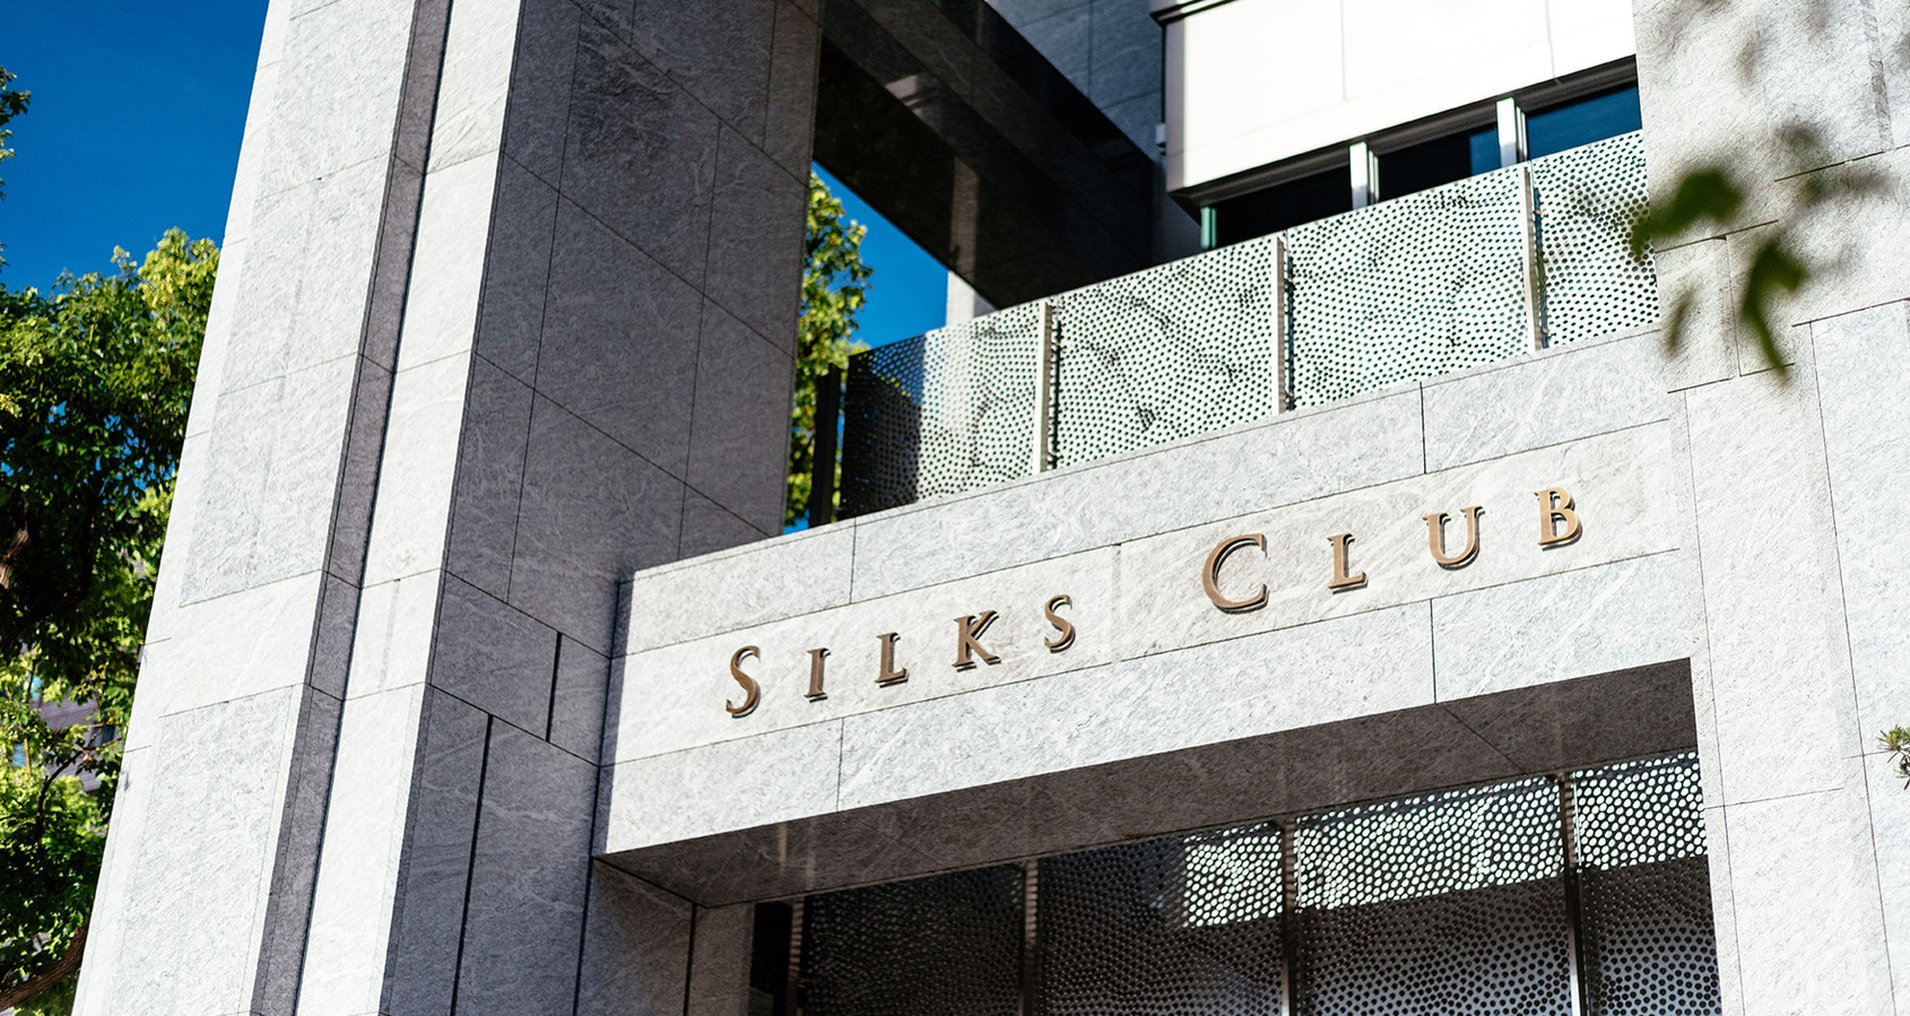 Silks Club image